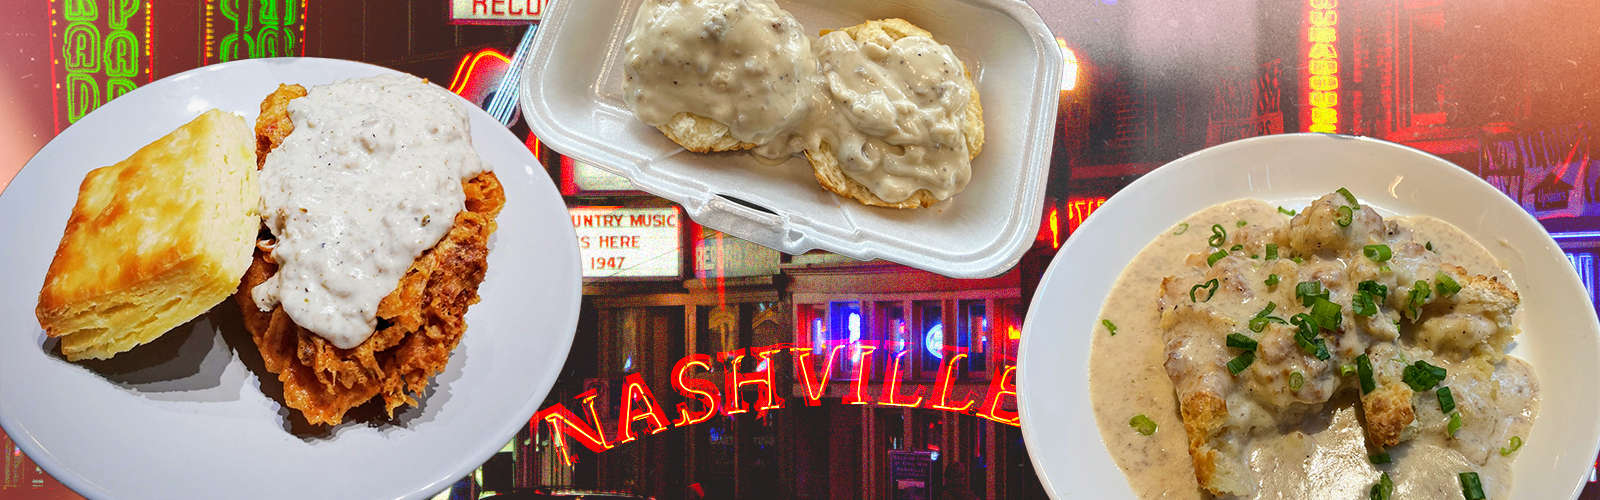 Nashville Biscuits and Gravy